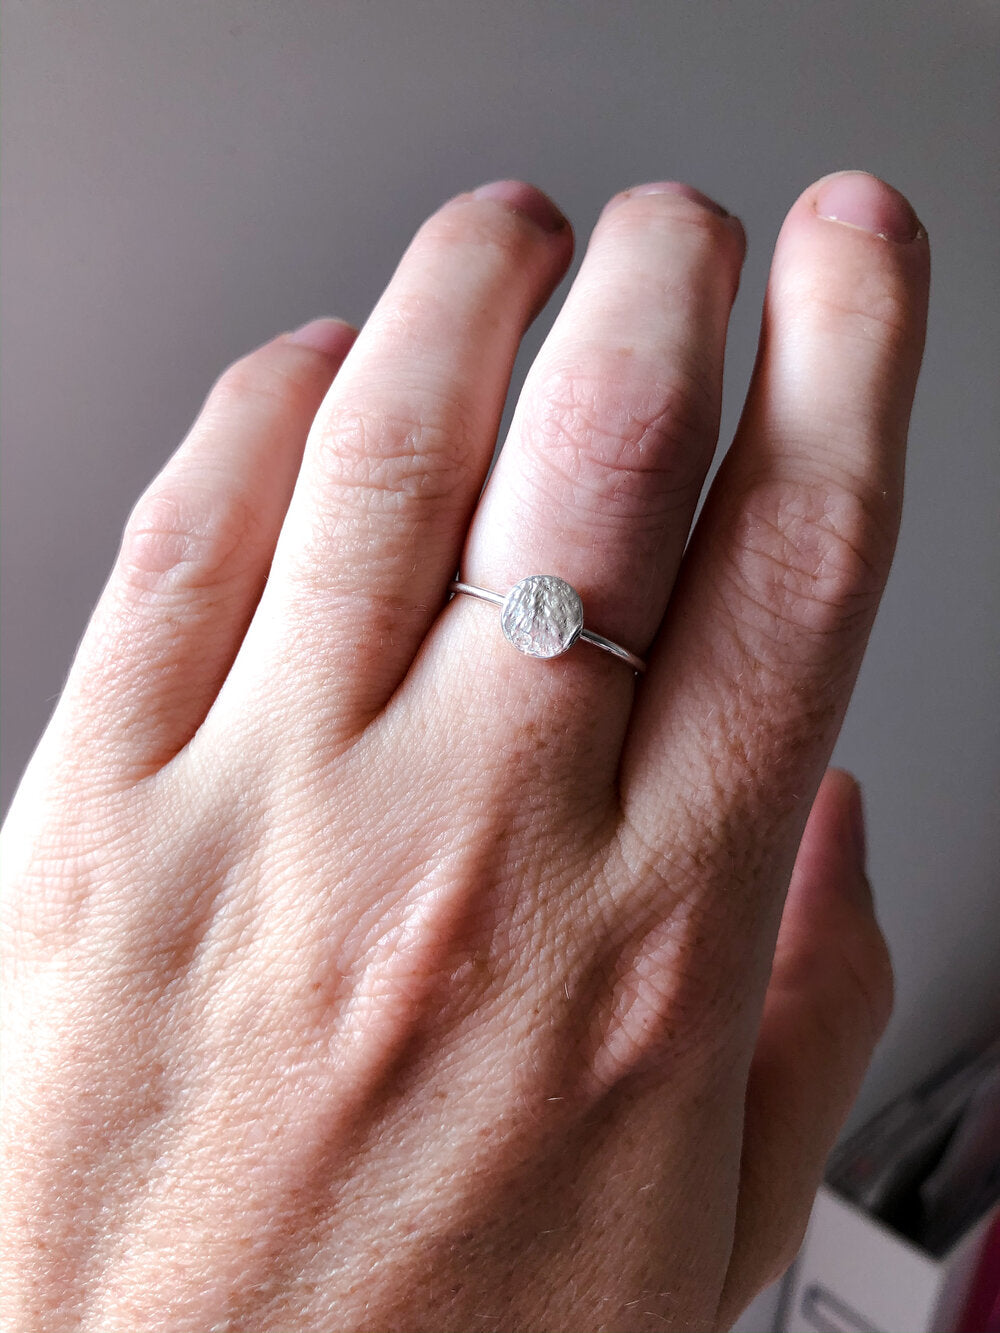 Oval or Circle Fingerprint Ring - Sterling Silver - Print Impression Kit + Ring